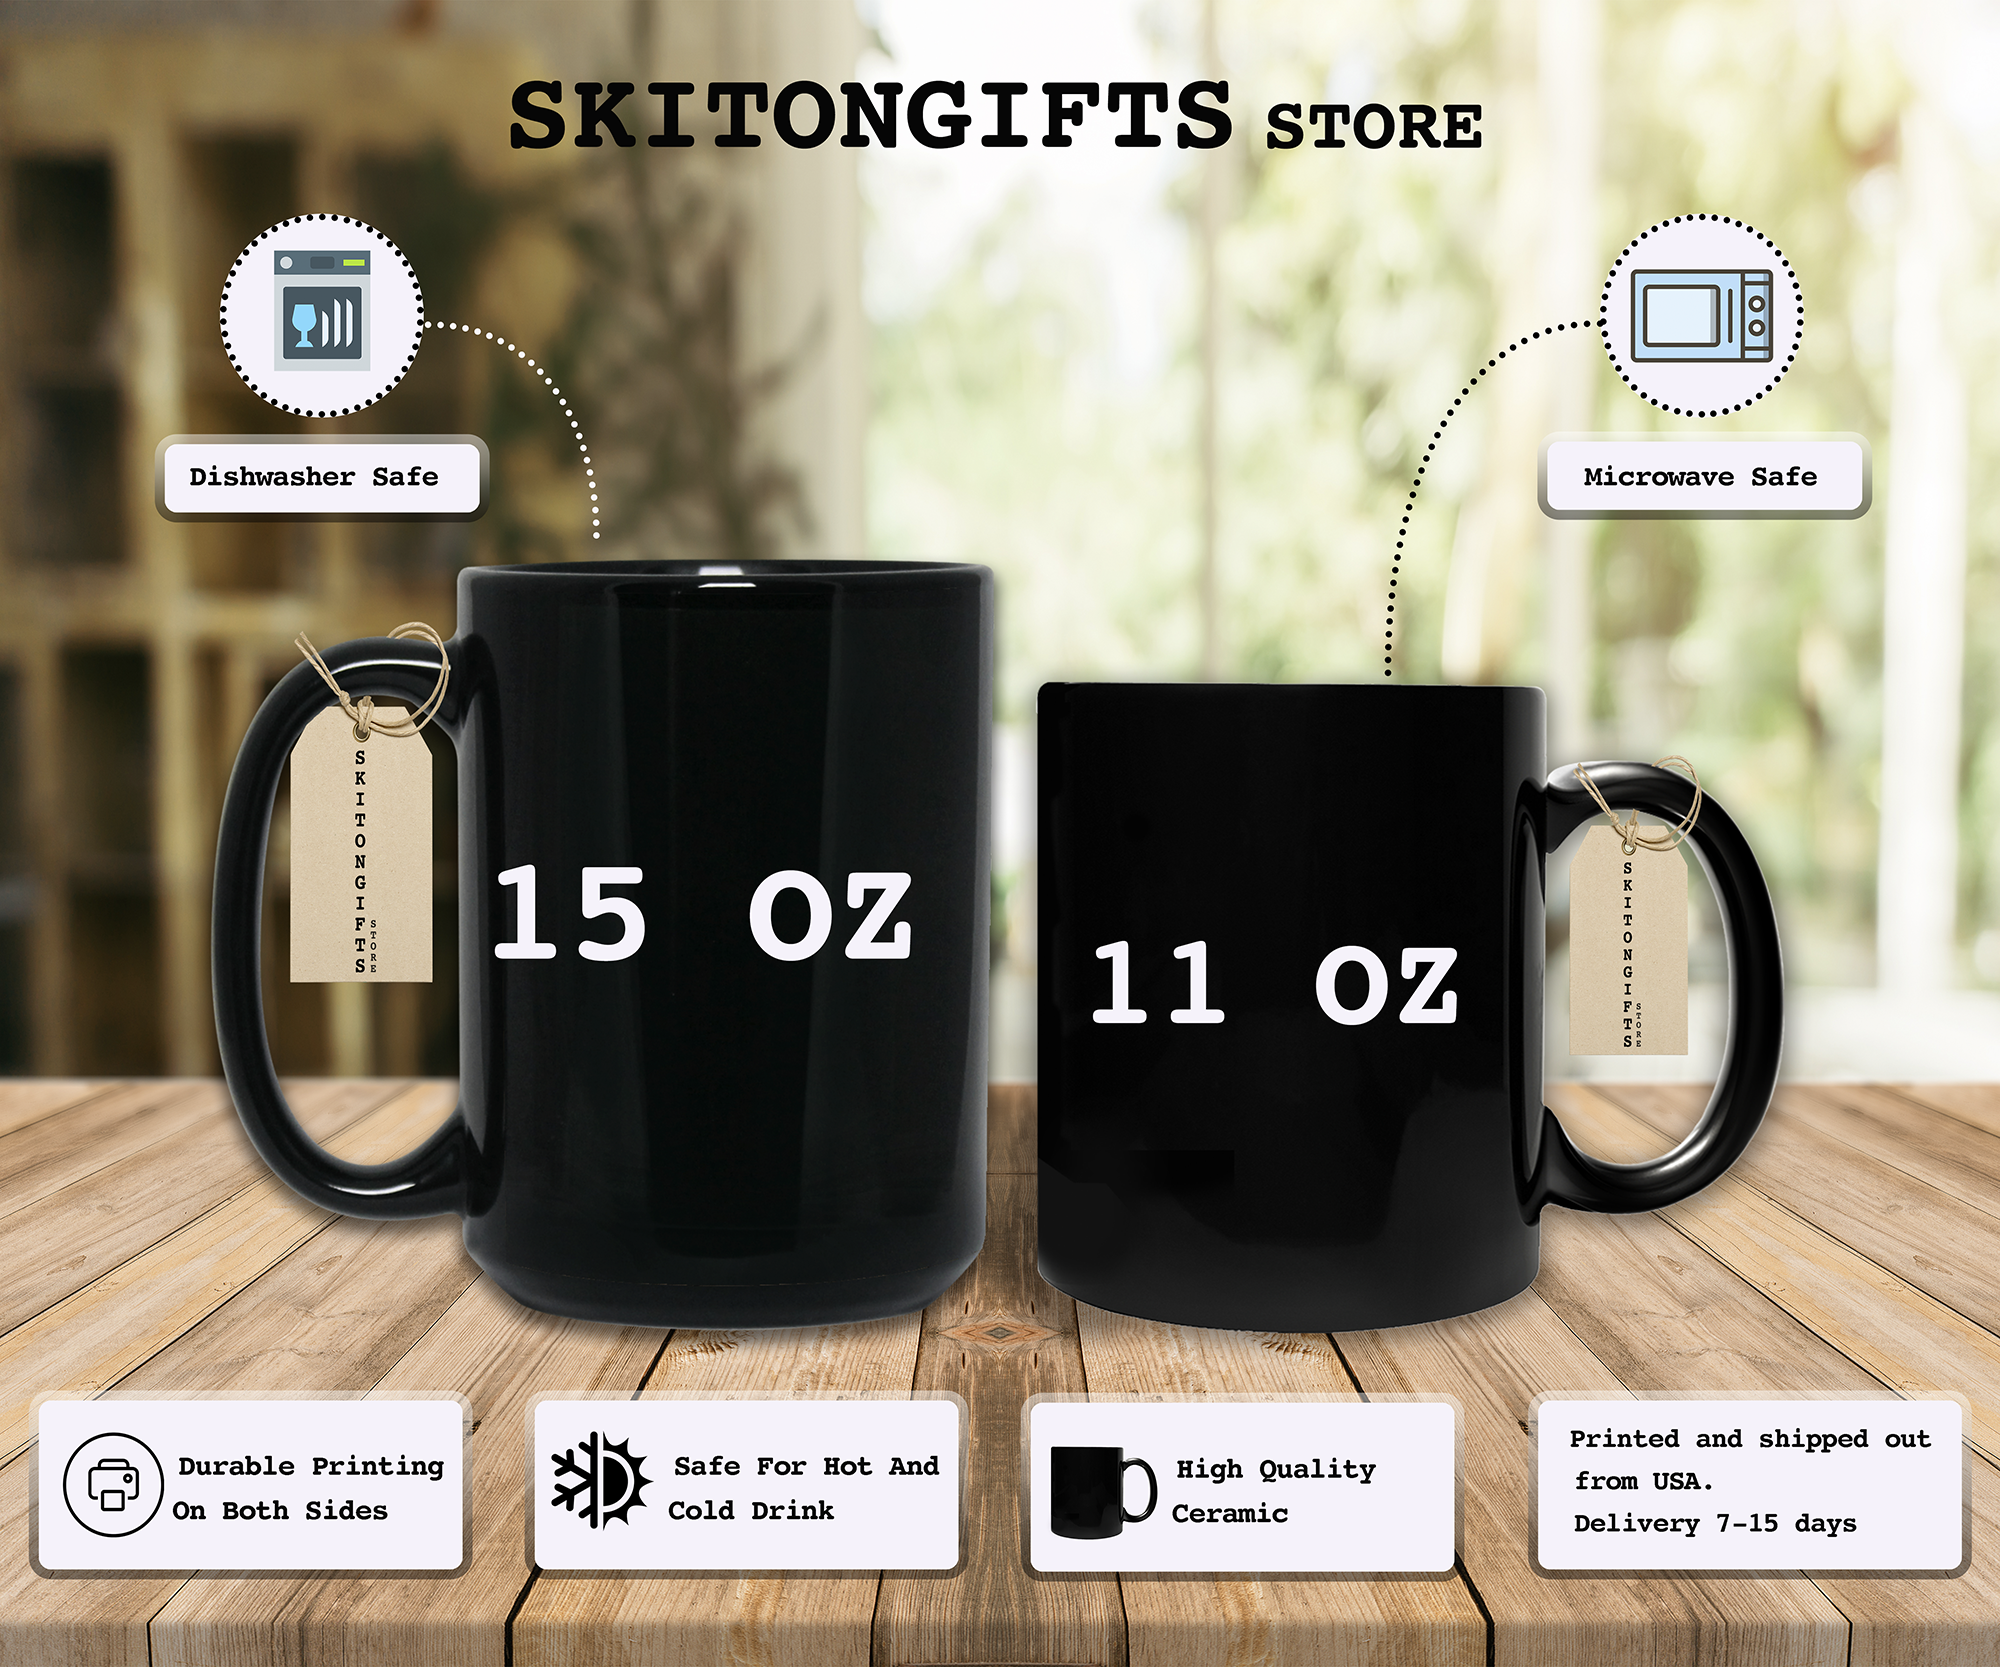 Skitongifts Coffee Mug Funny Ceramic Novelty I Just Freaking Love Frogs, Ok I2Wai2Q